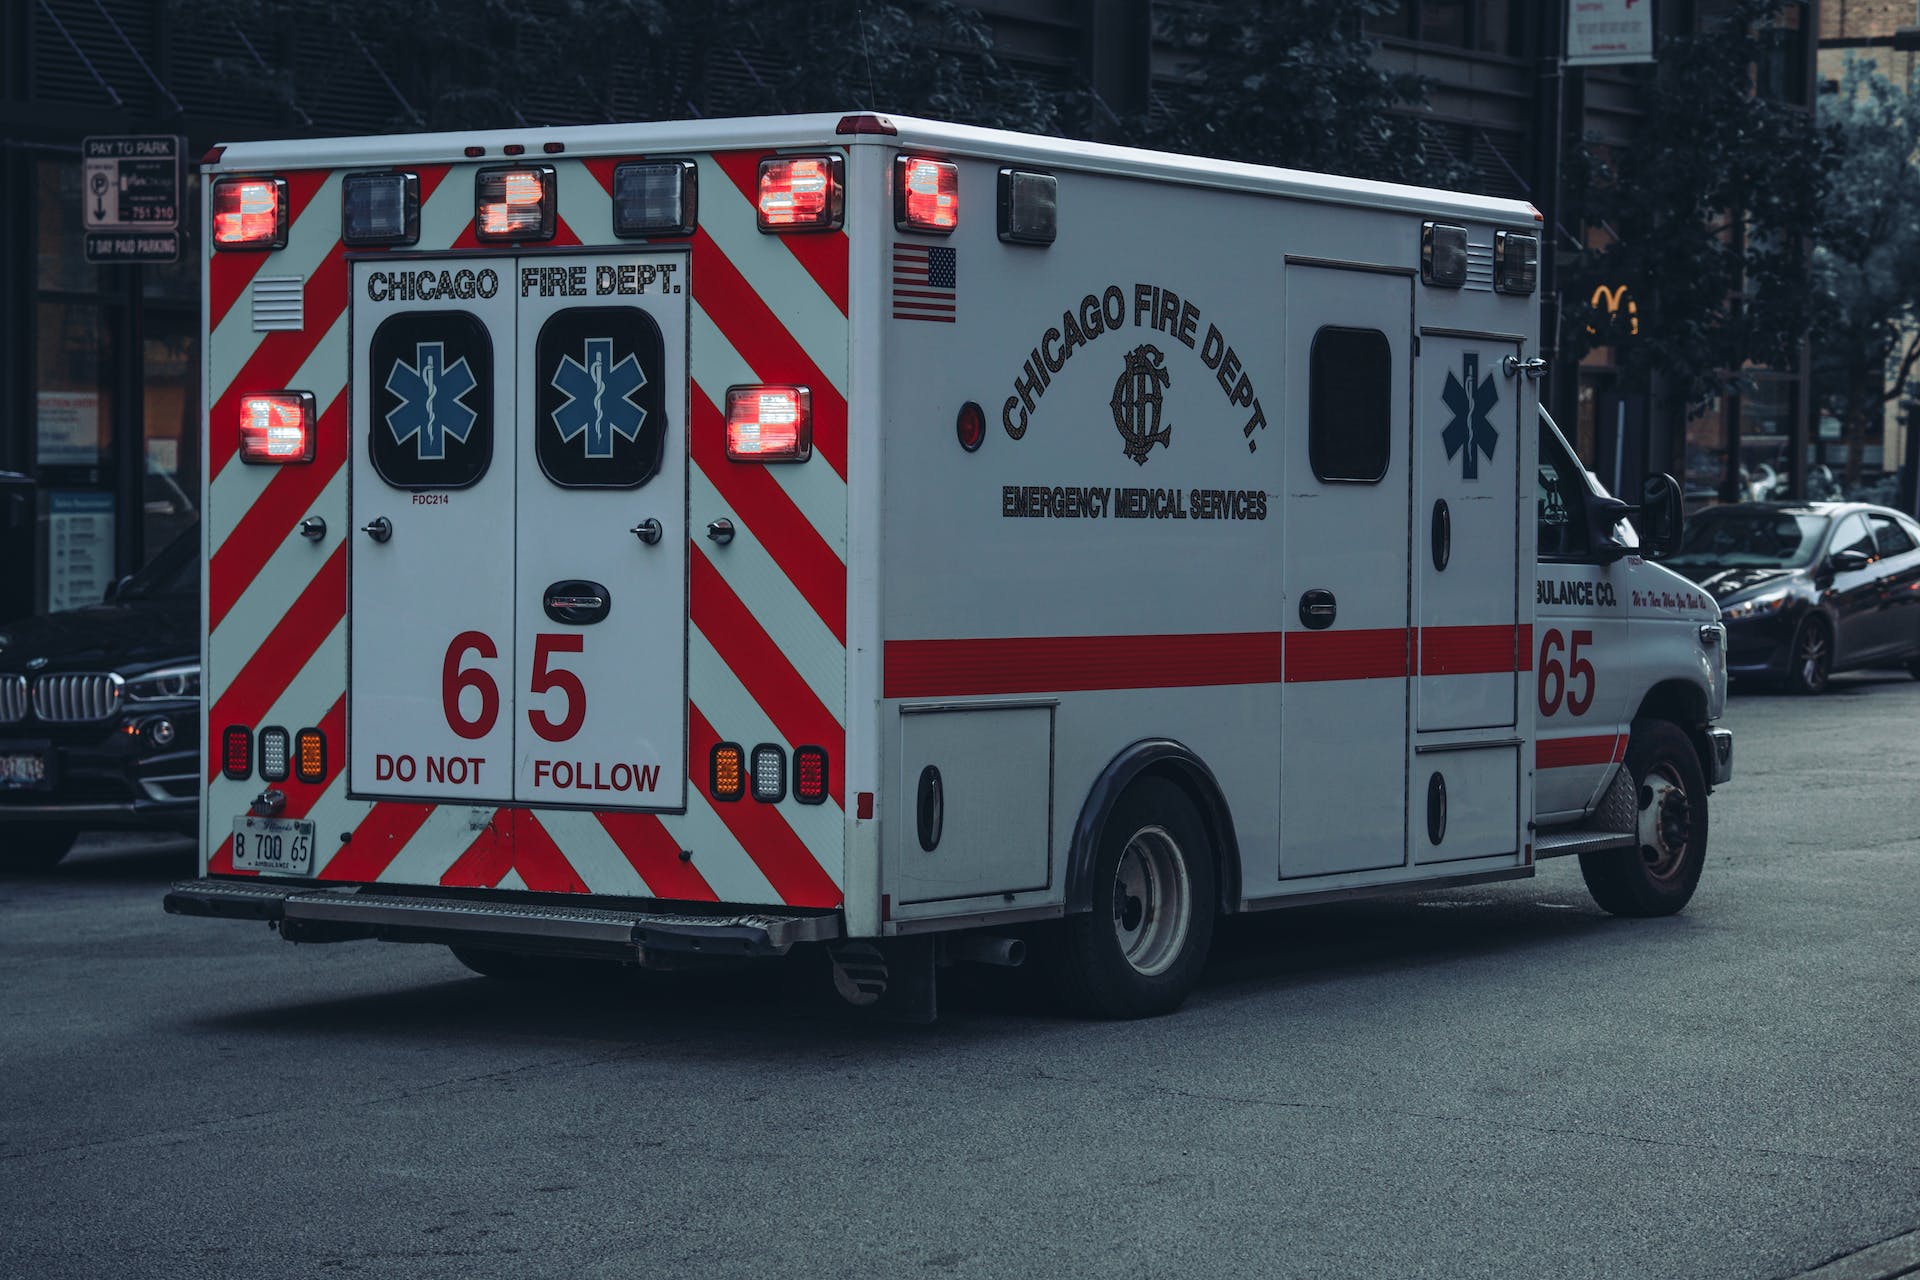 An ambulance on a street | Source: Pexels